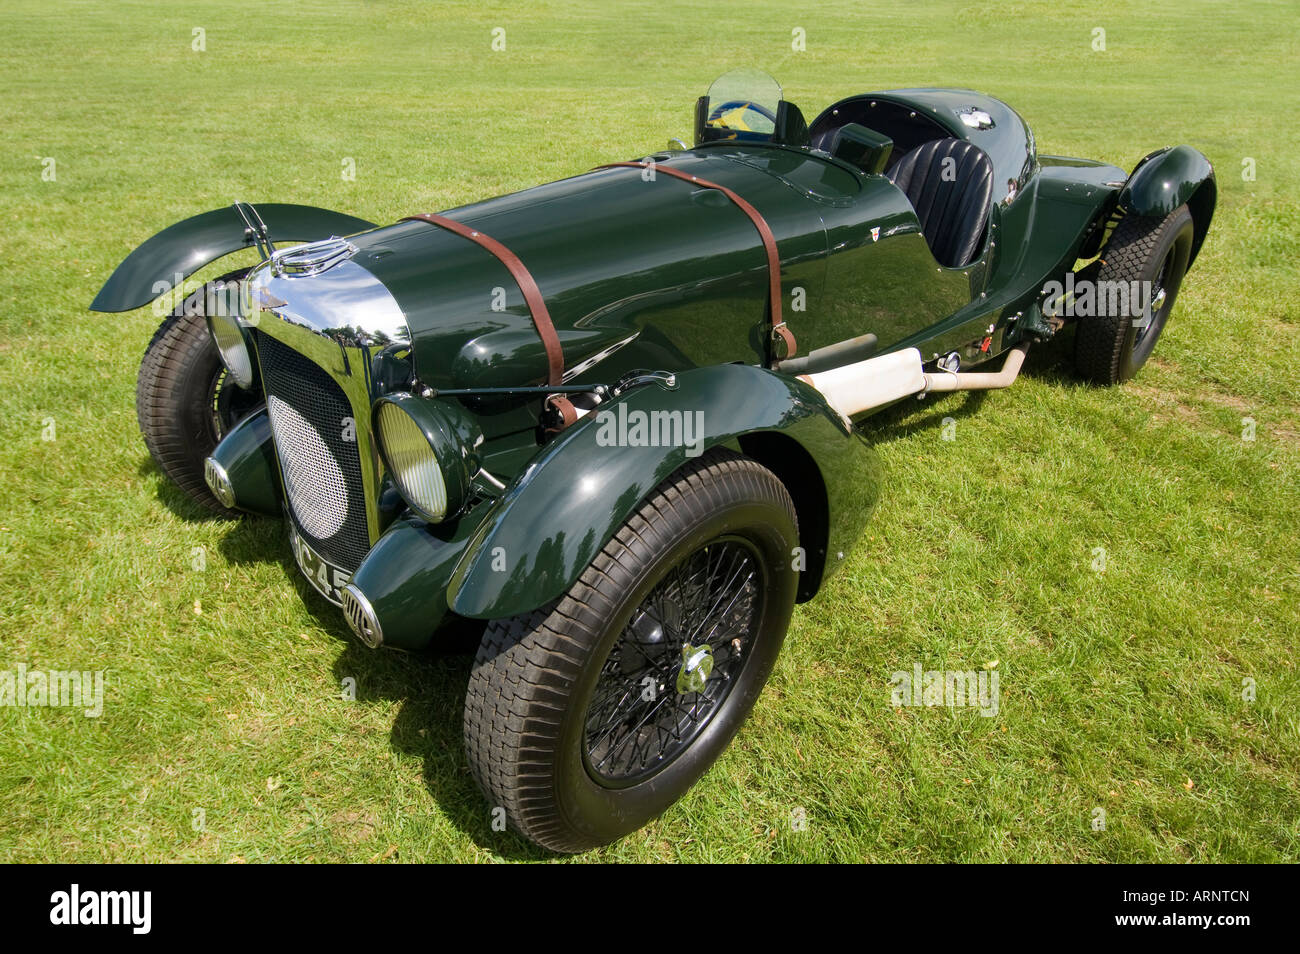 A historic British racing green 1939 Lagonda V12 Le Mans motor car stood on grass Stock Photo